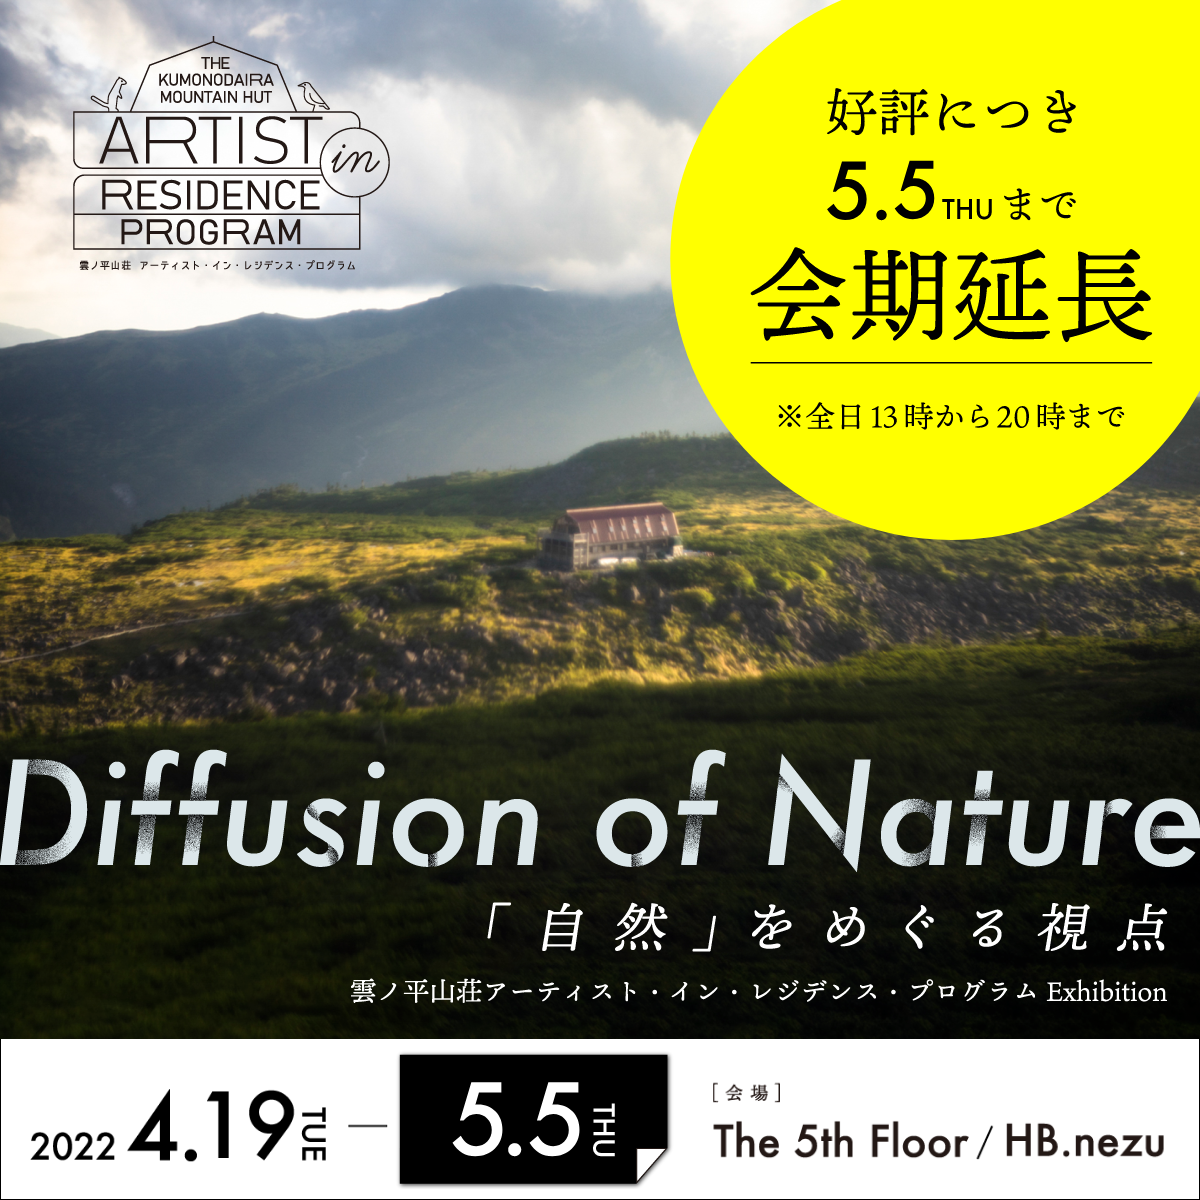 Diffusion of Nature「自然」をめぐる視点 : 雲ノ平山荘アーティスト・イン・レジデンス・プログラム 展覧会